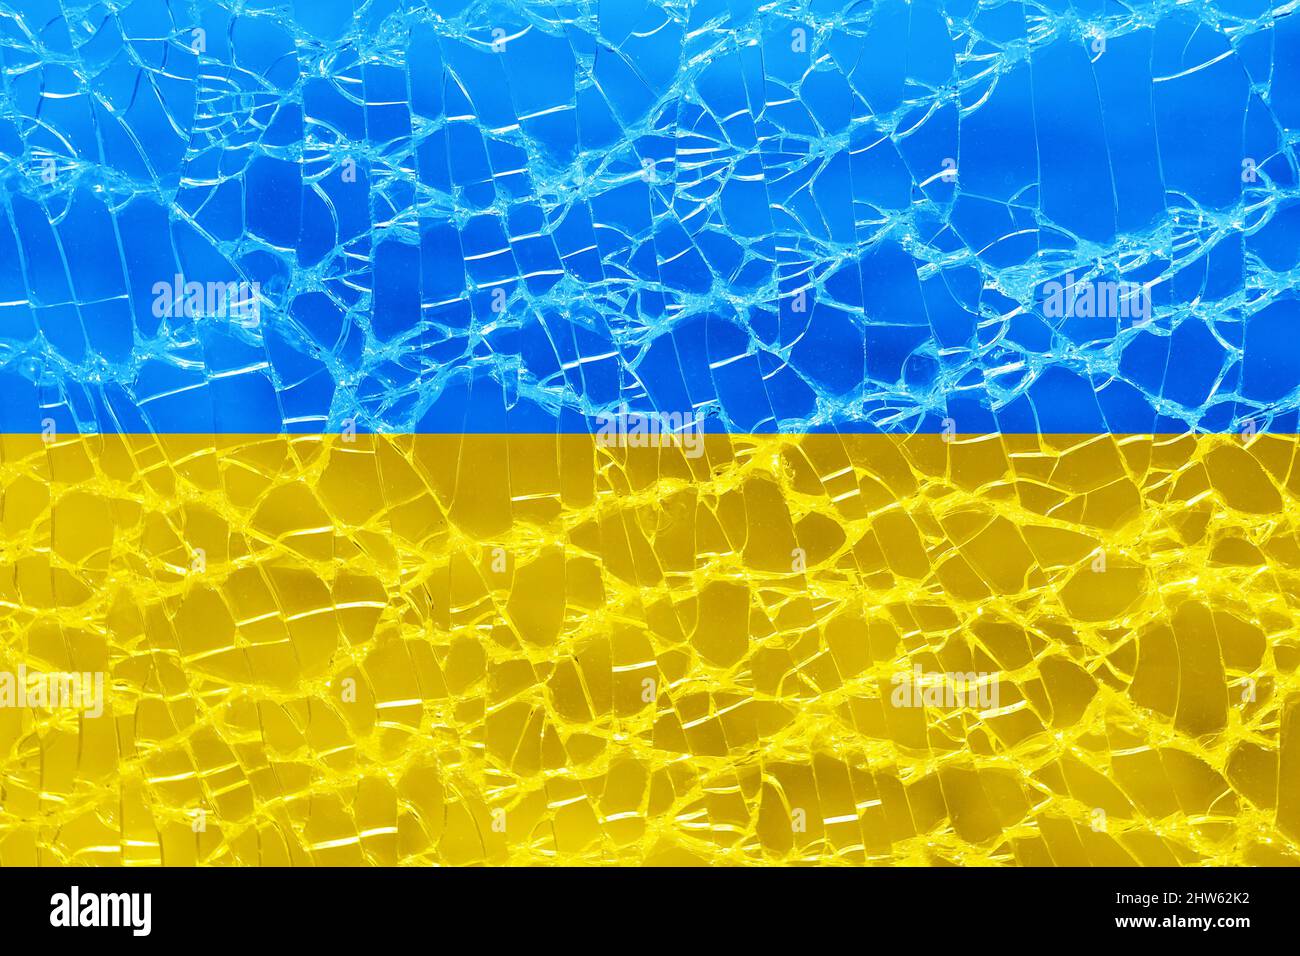 flag of ukraine on broken glass background Stock Photo